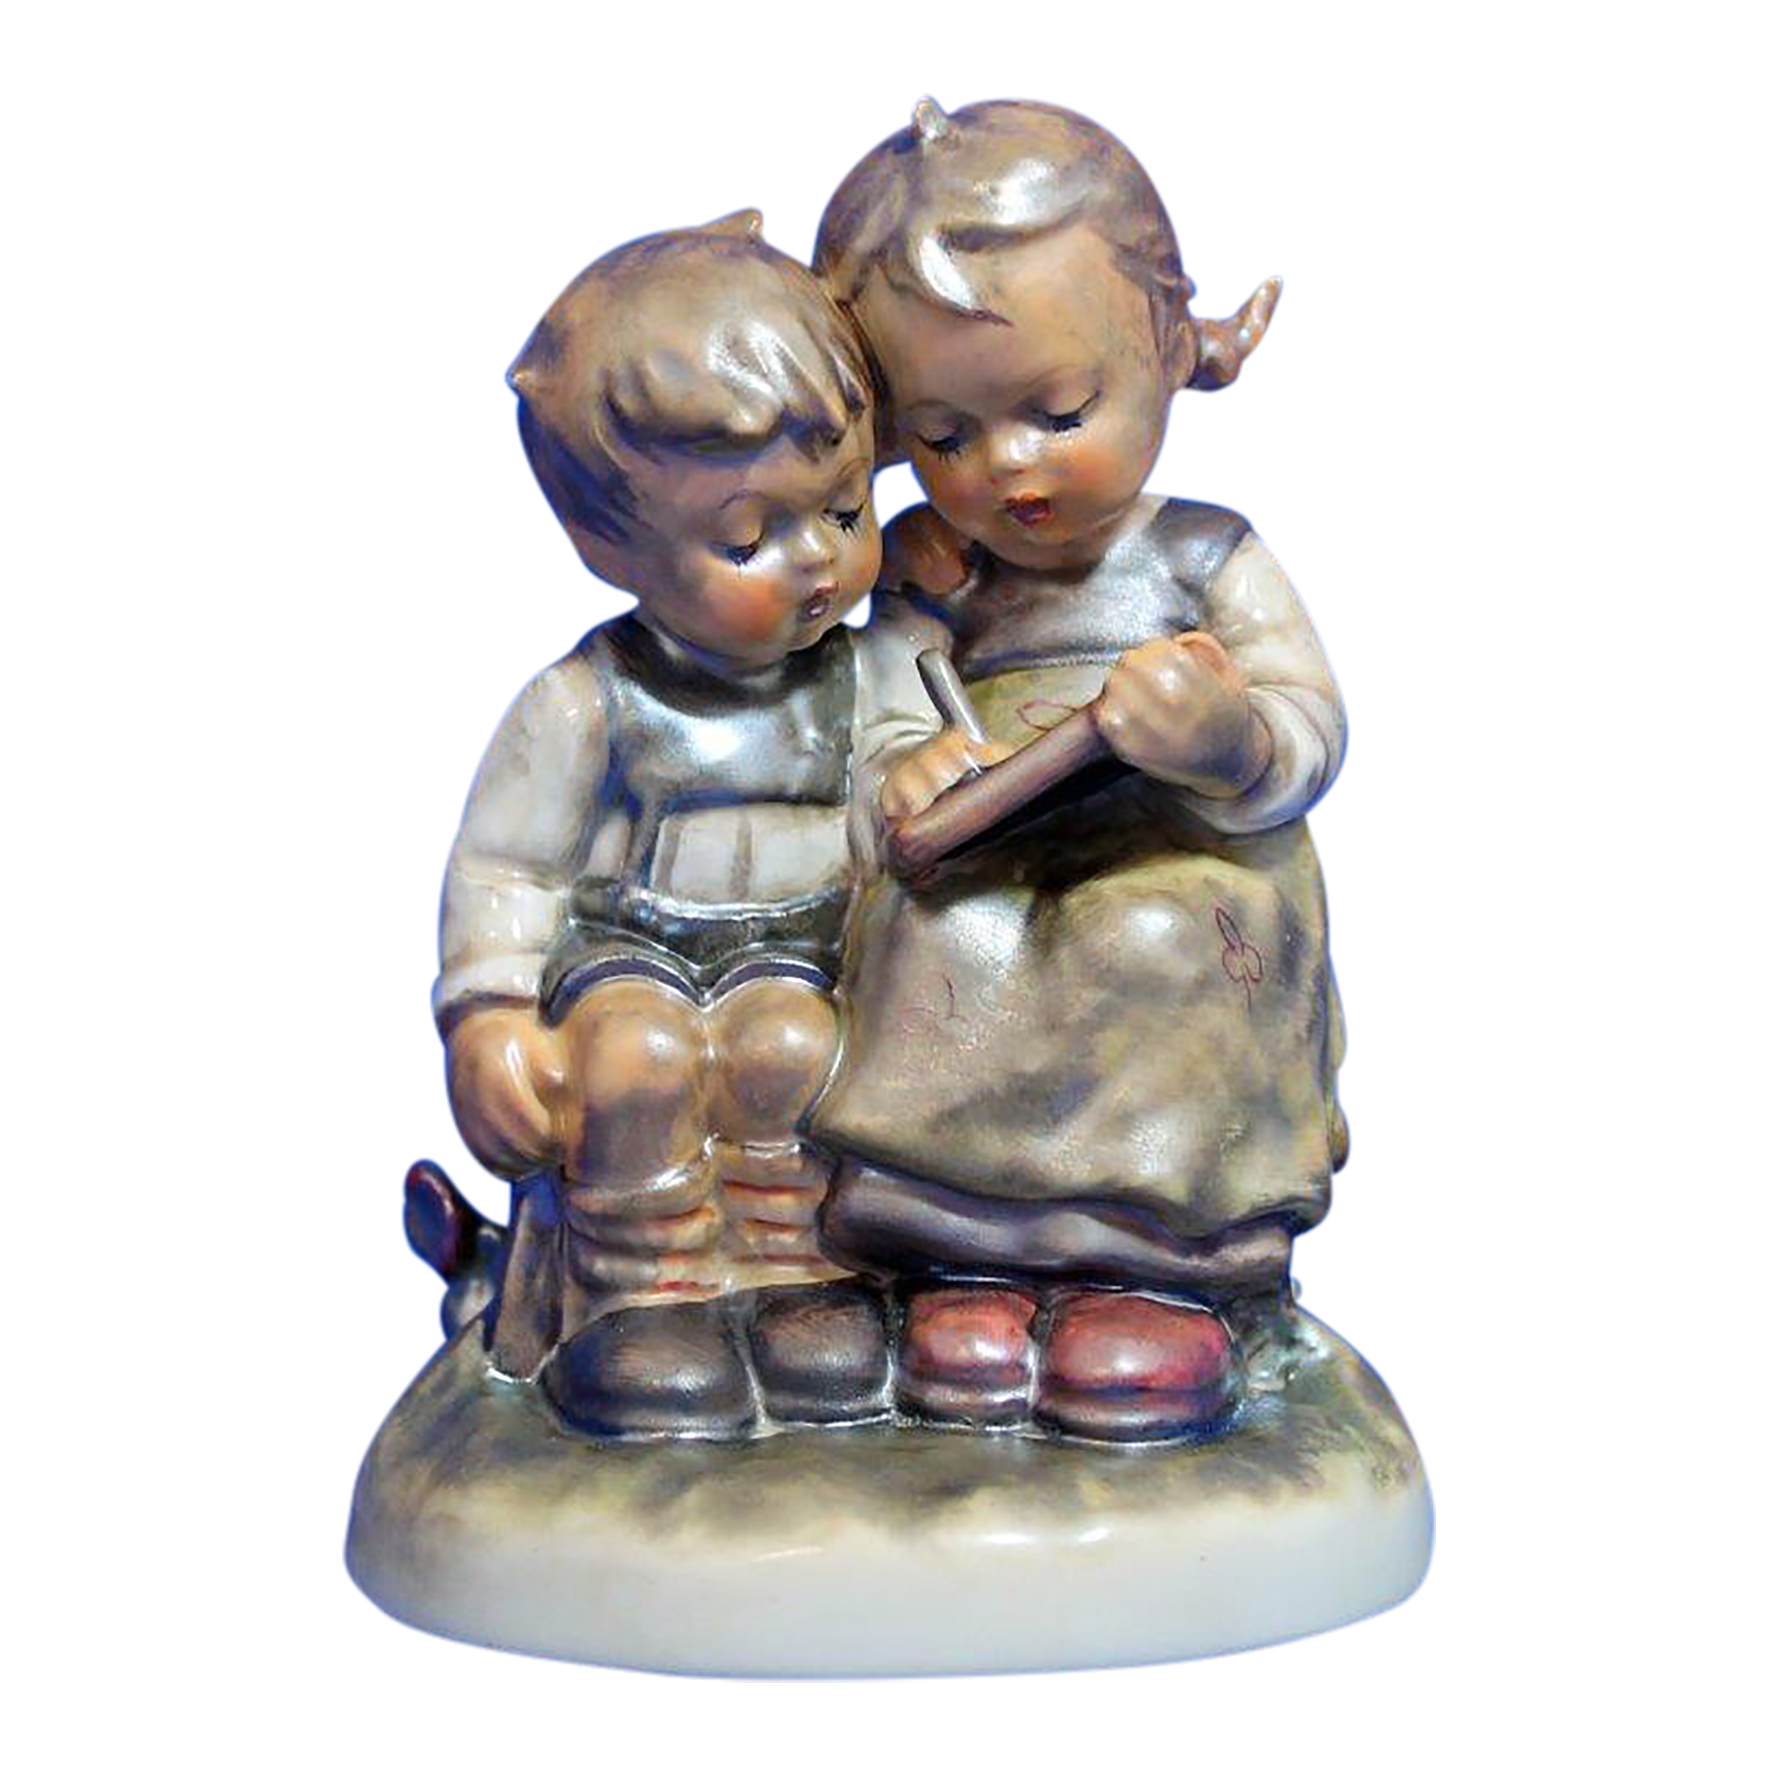 Hummel Figurine 346 no box Smart Little Sister 748141007723 | eBay